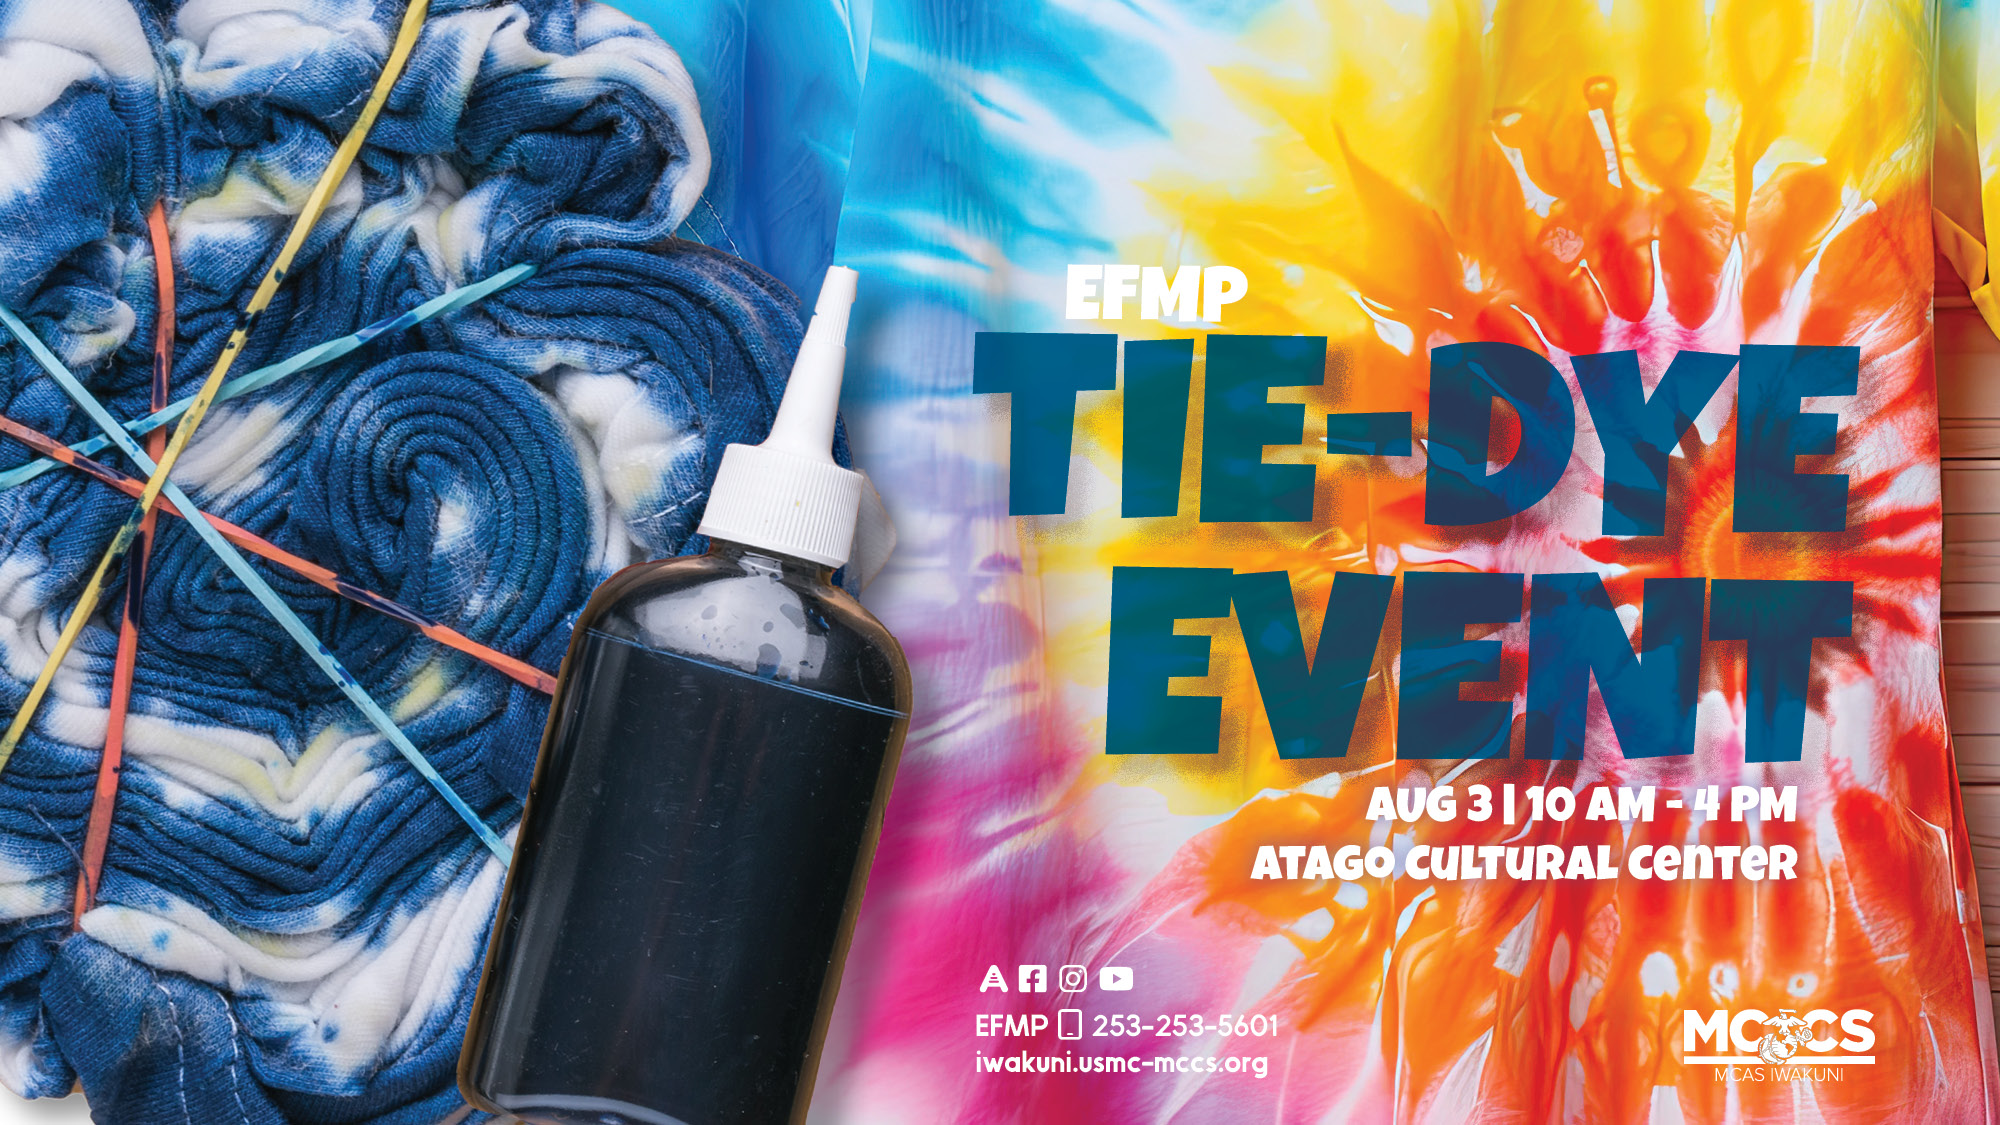 EFMP Annual Tie-Dye Event